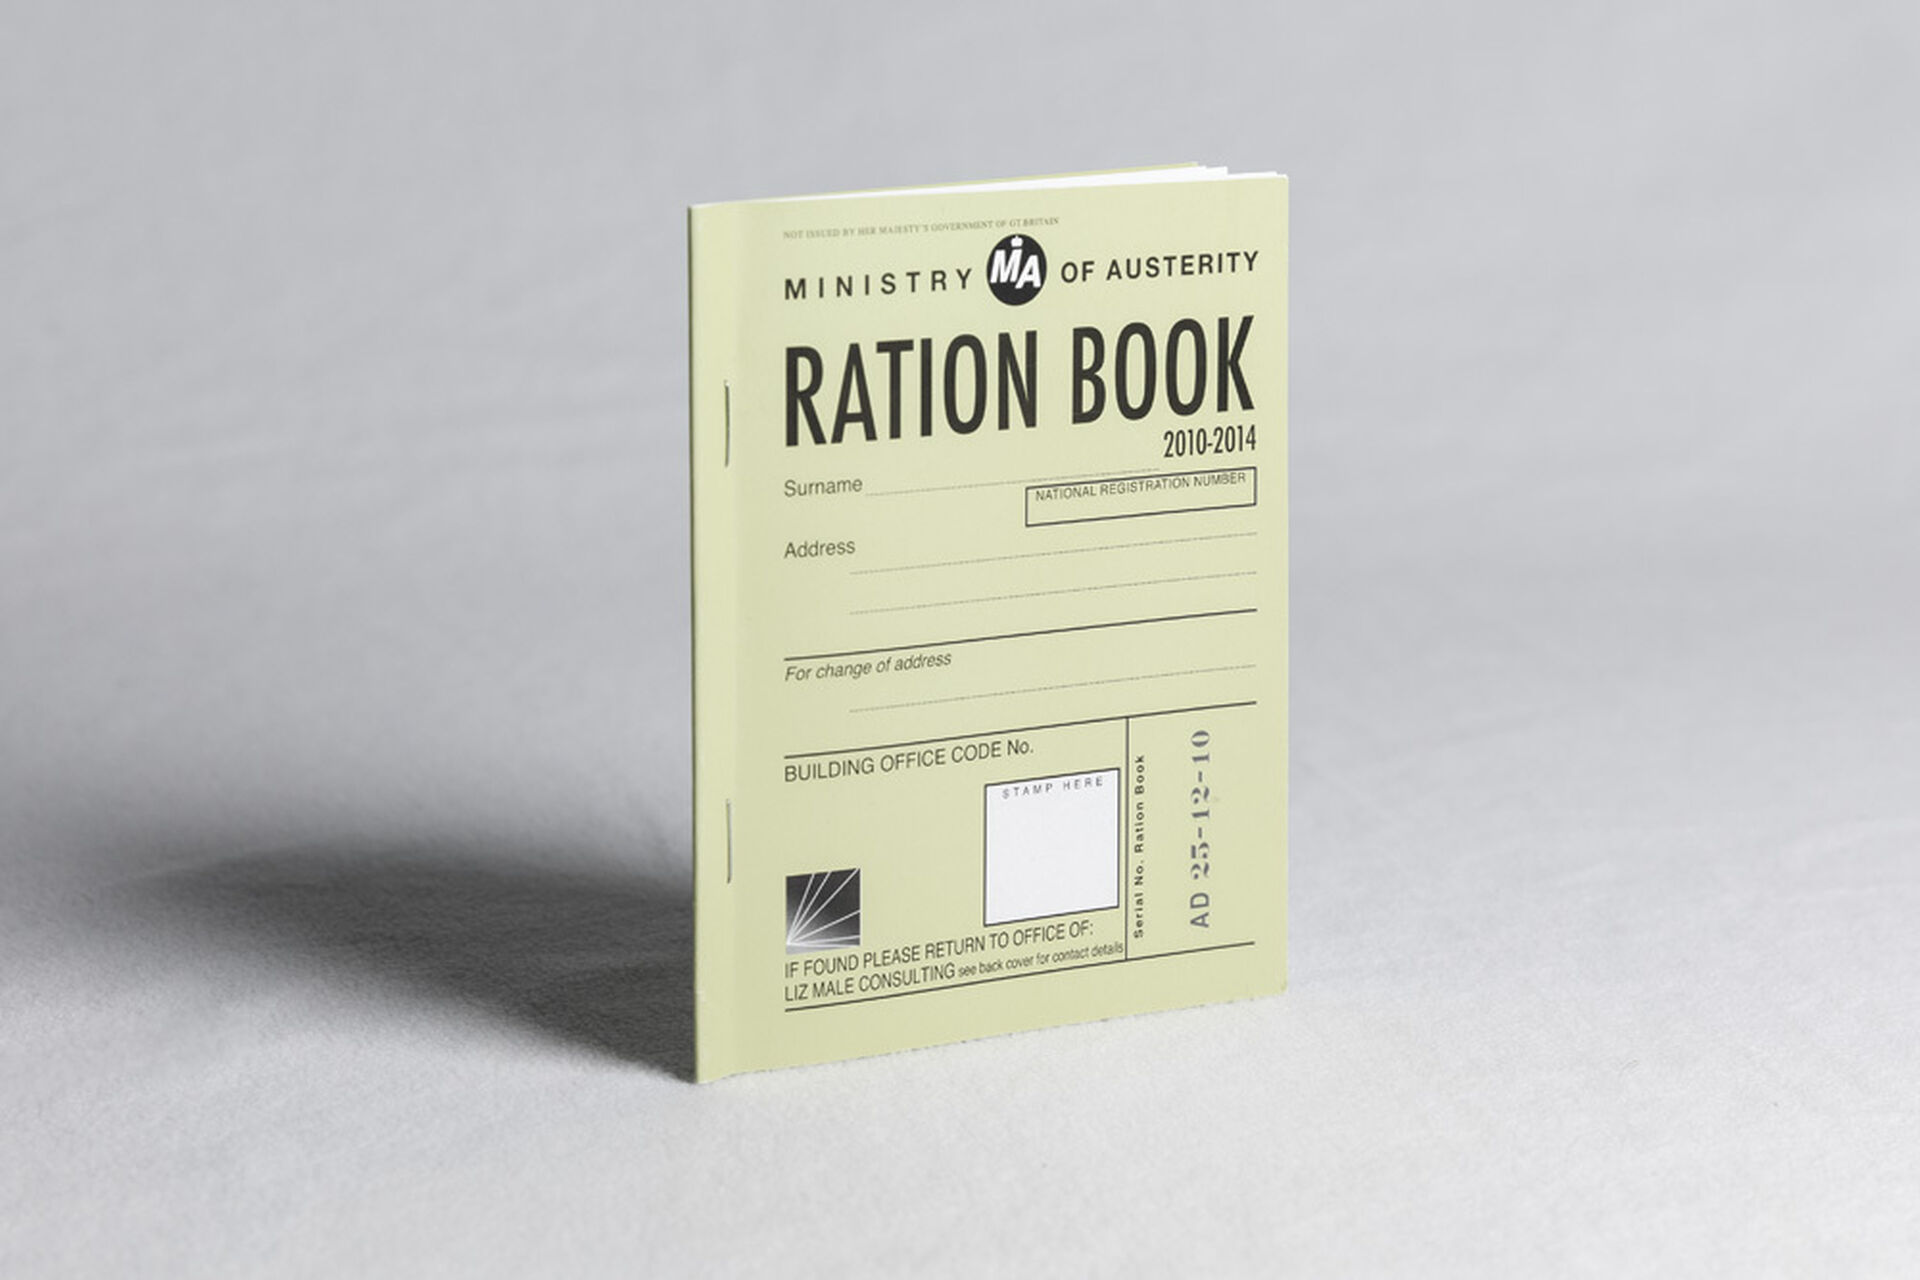 Lmc xmas card ration book 2010